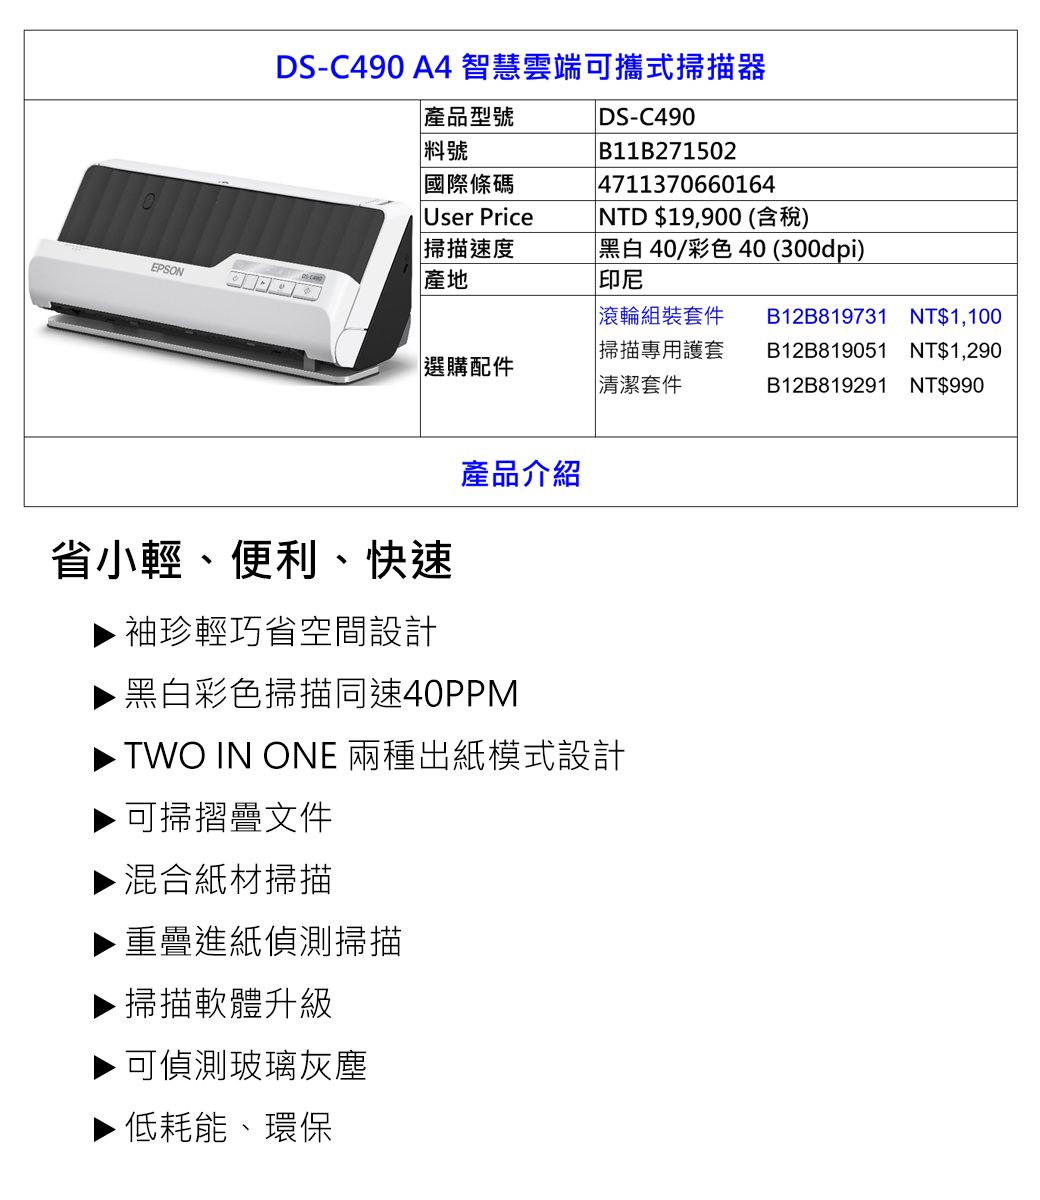 EPSON EPSON DS-C490 A4 智慧雲端 可攜